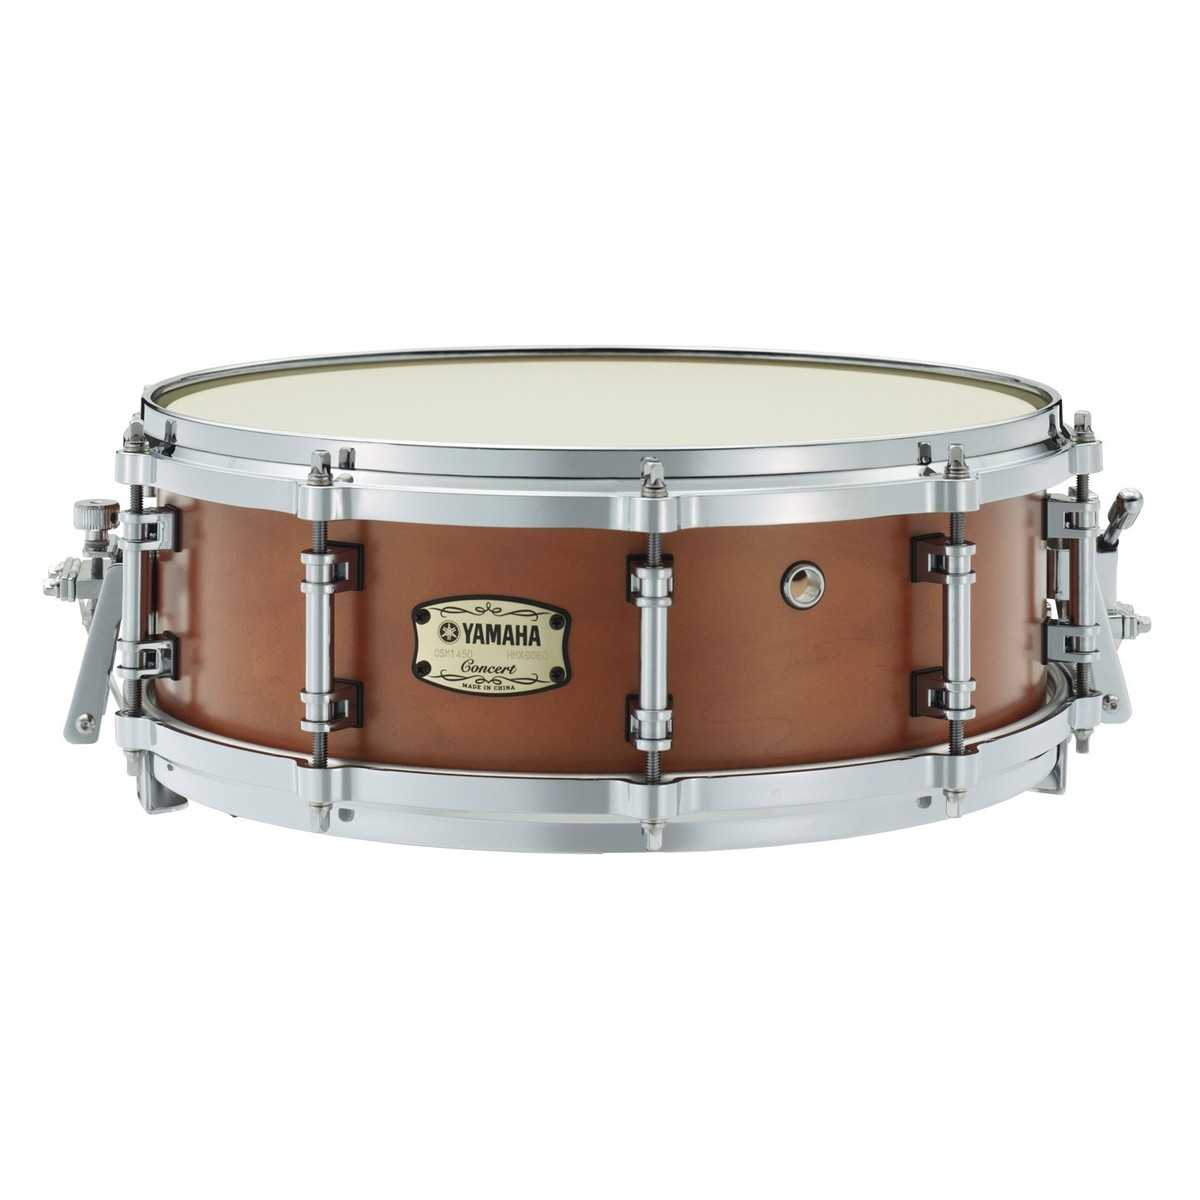 Yamaha OSM-1450 14x5 inch Snare Drum